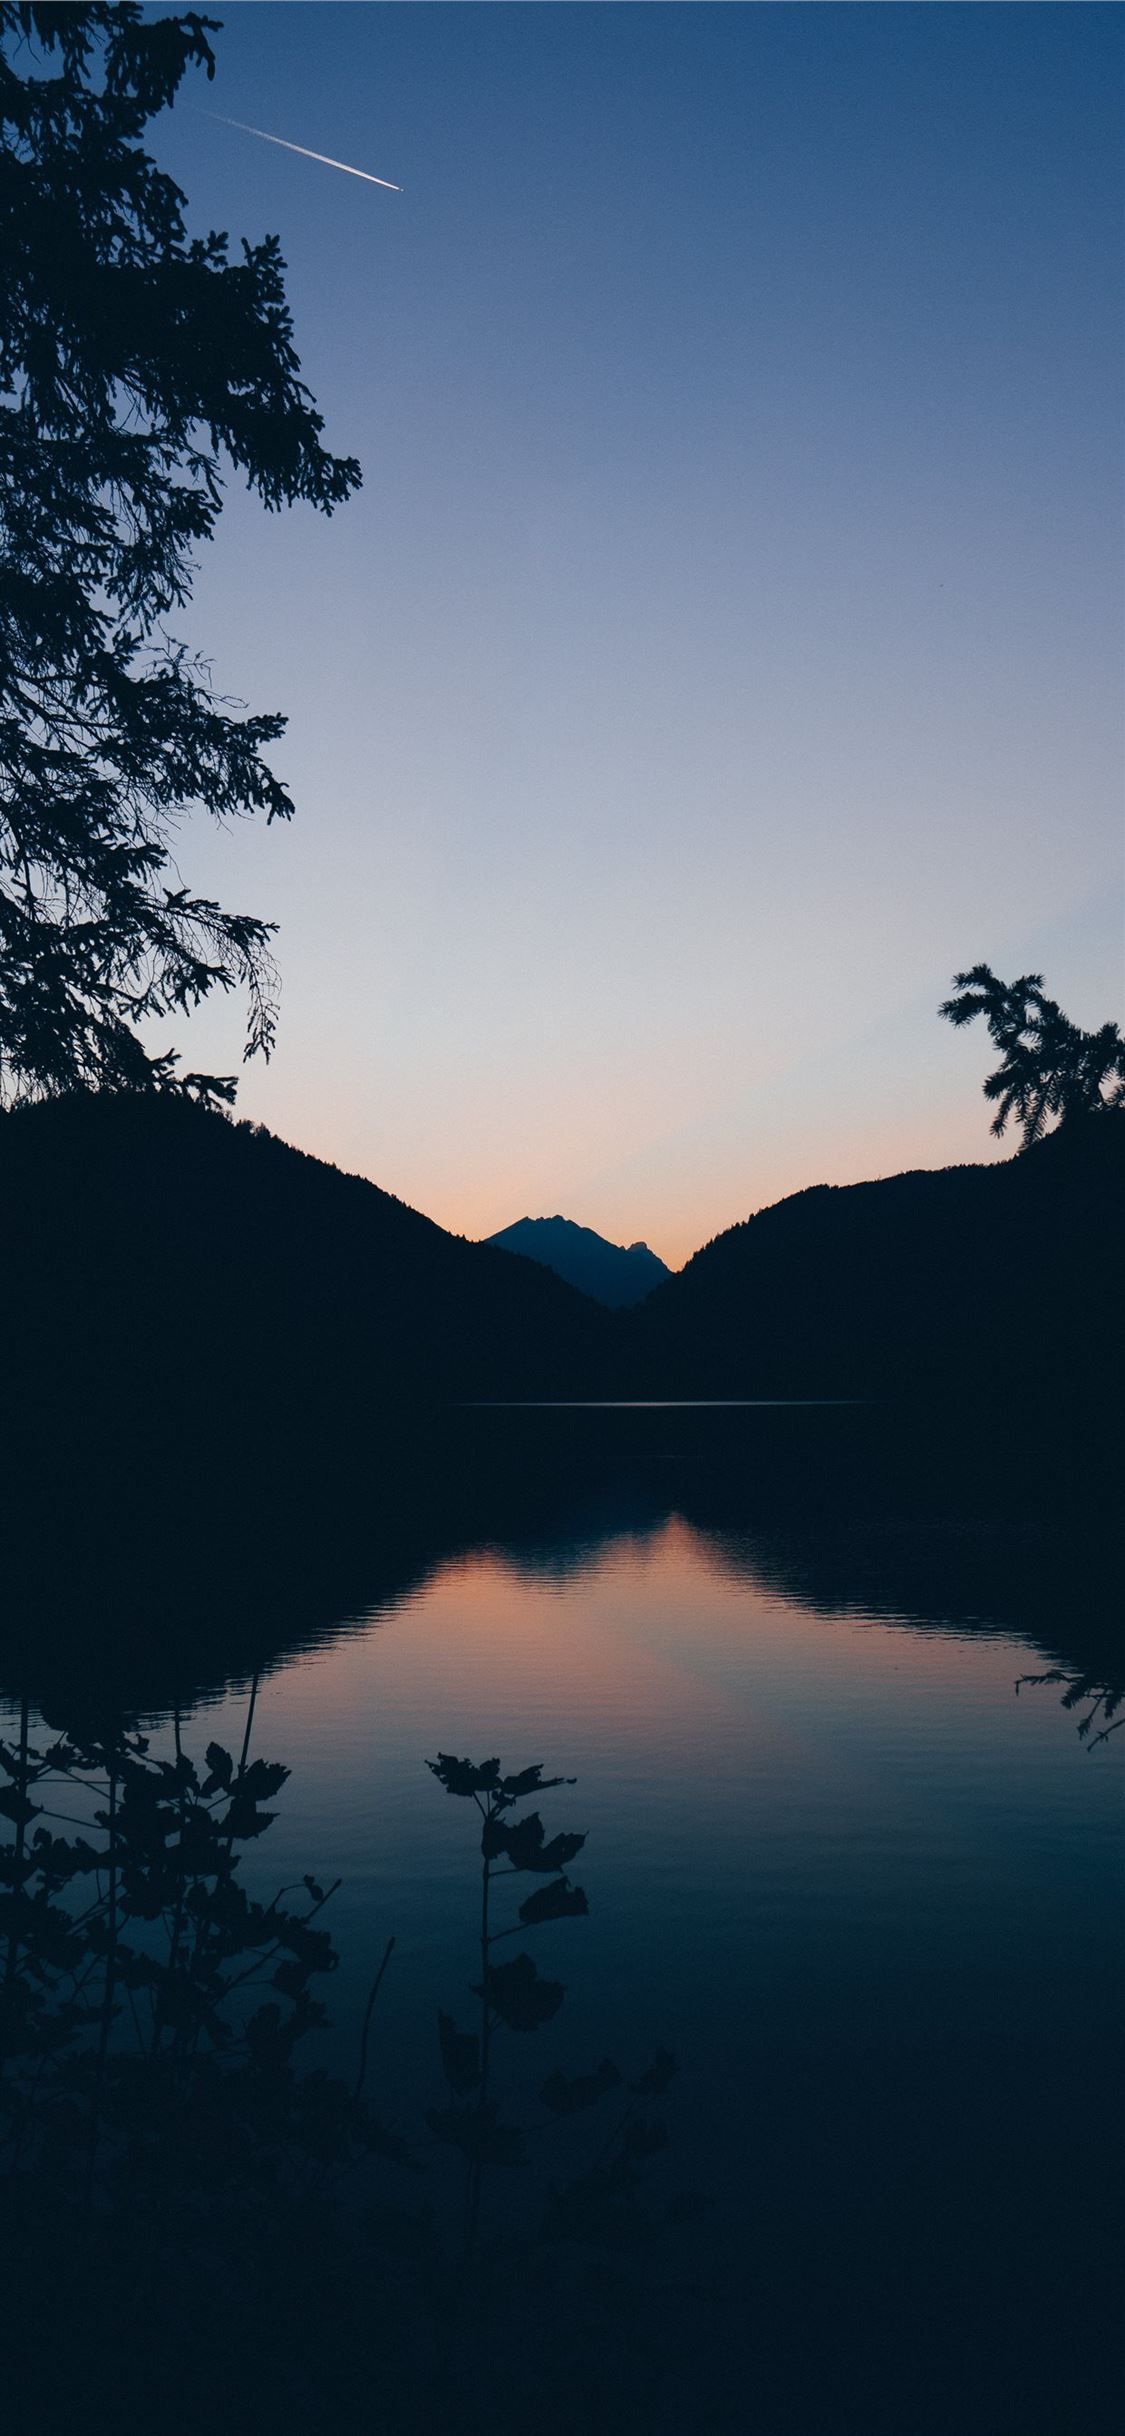 A beautiful shot of a lake and mountains at sunset - Lake